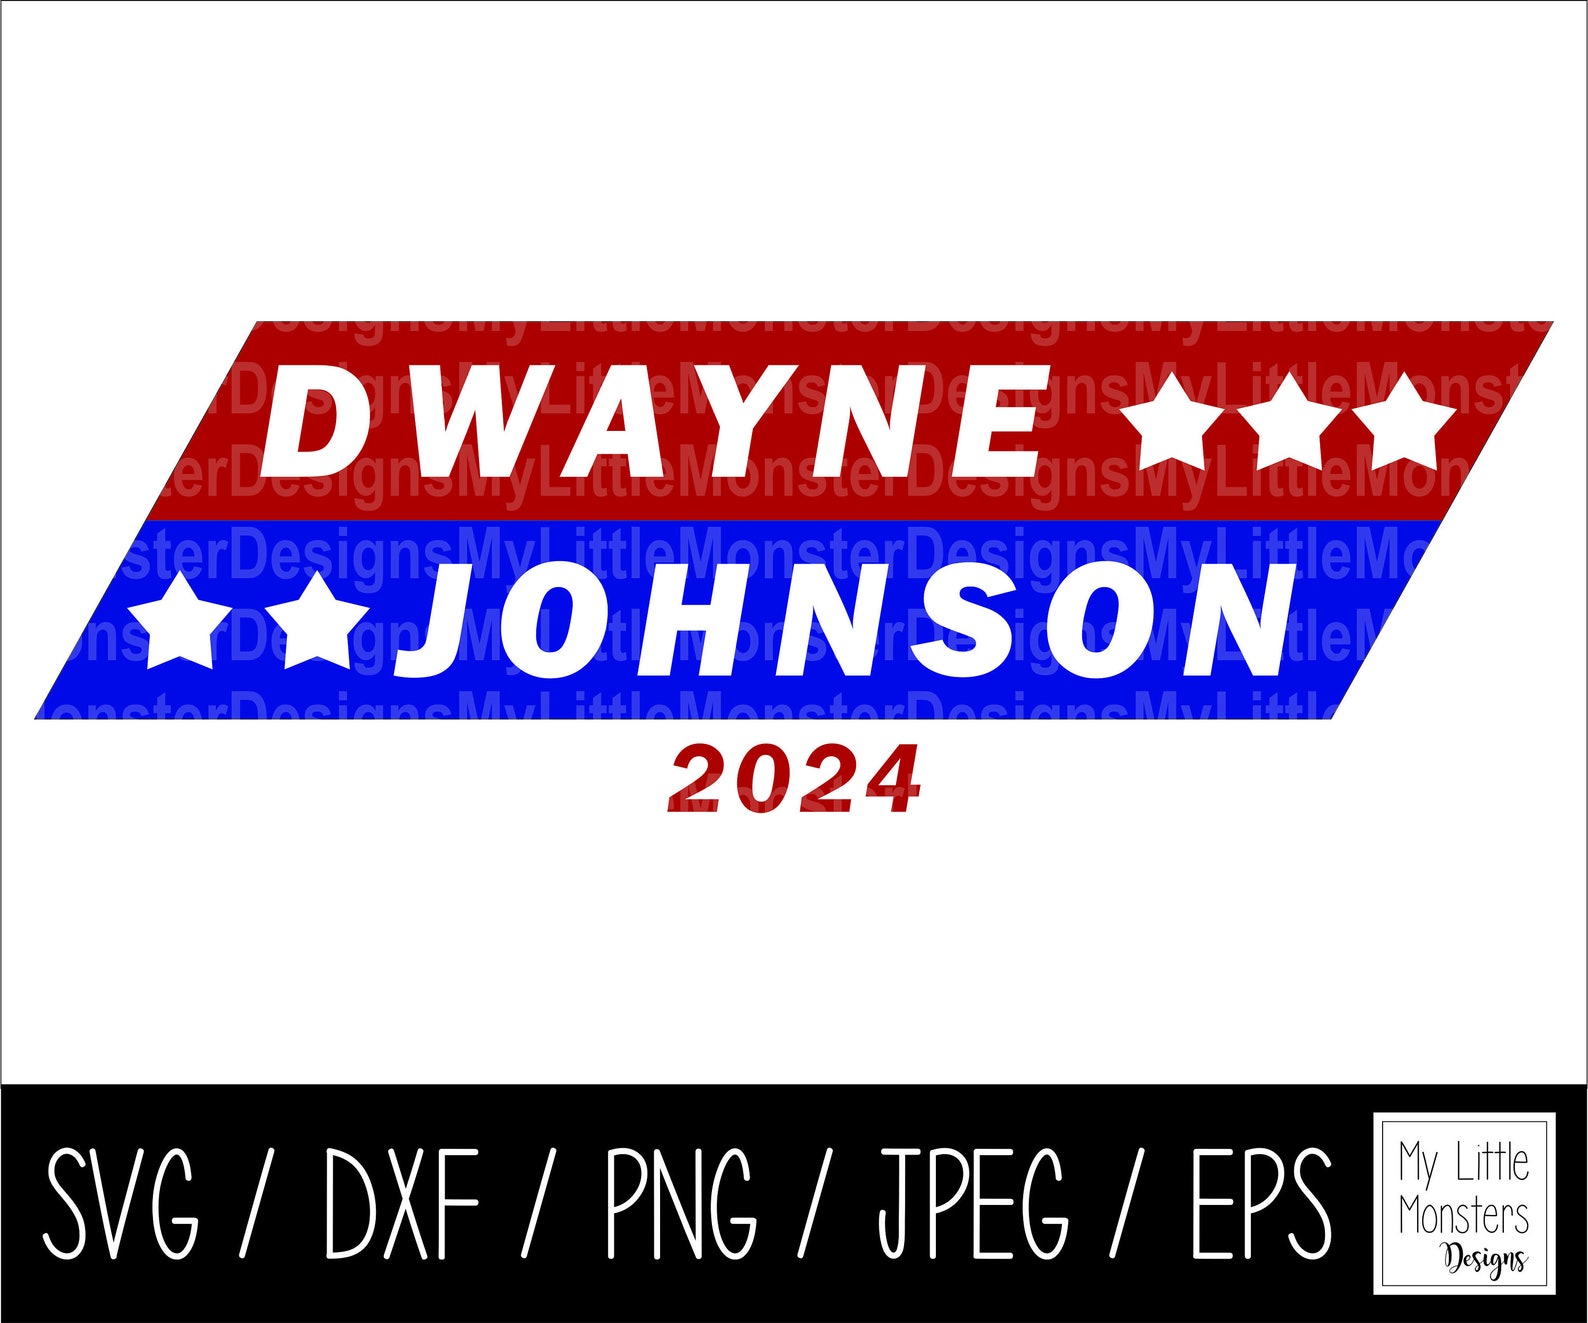 Dwayne Johnson 2024 The Rock for President Digital Download Etsy